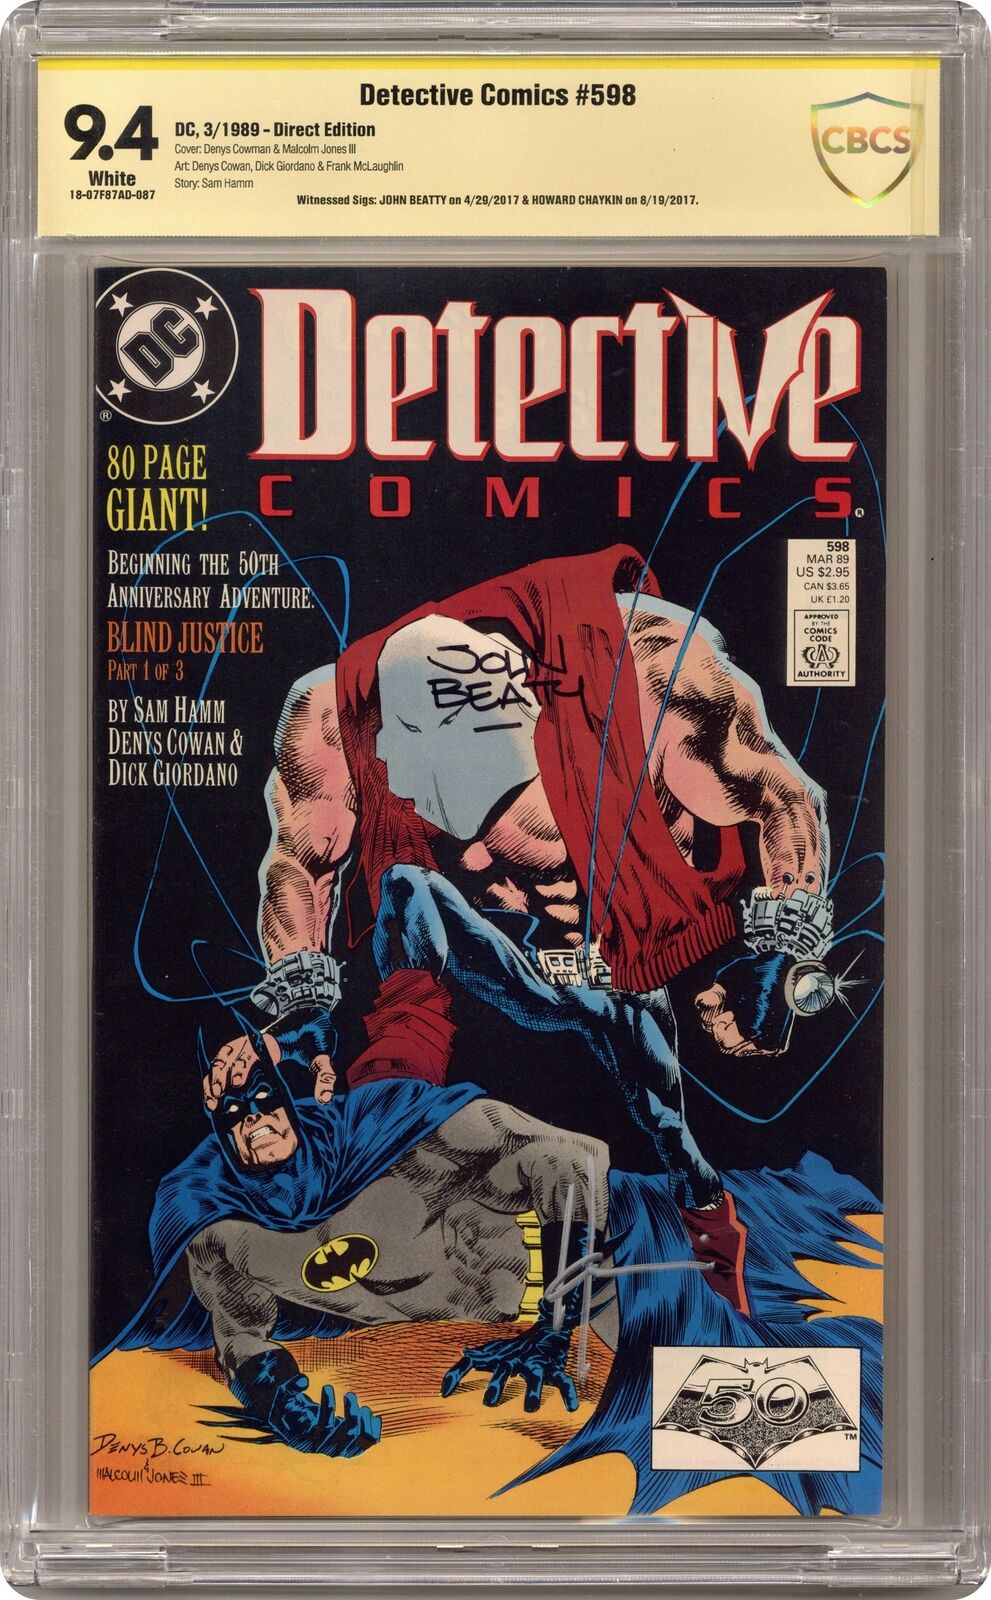 Detective Comics #598 CBCS 9.4 SS Beatty/Chaykin 1989 18-07F87AD-087